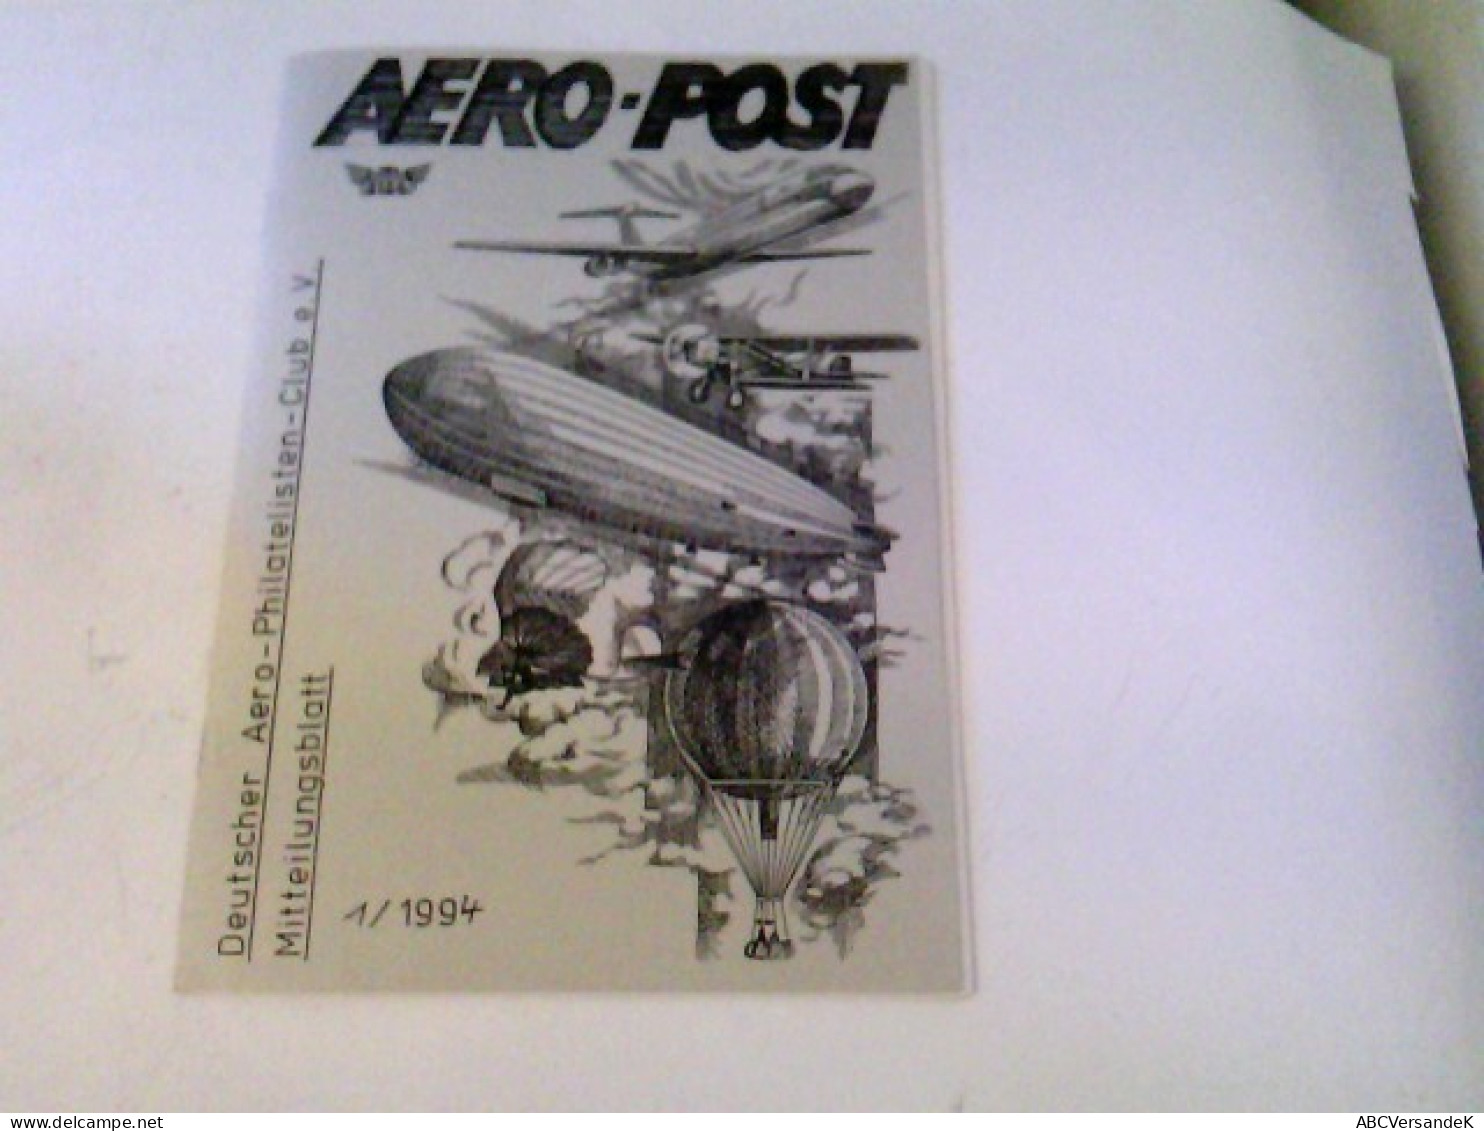 AERO-POST 1/1994 Mitteilungsblatt - Trasporti